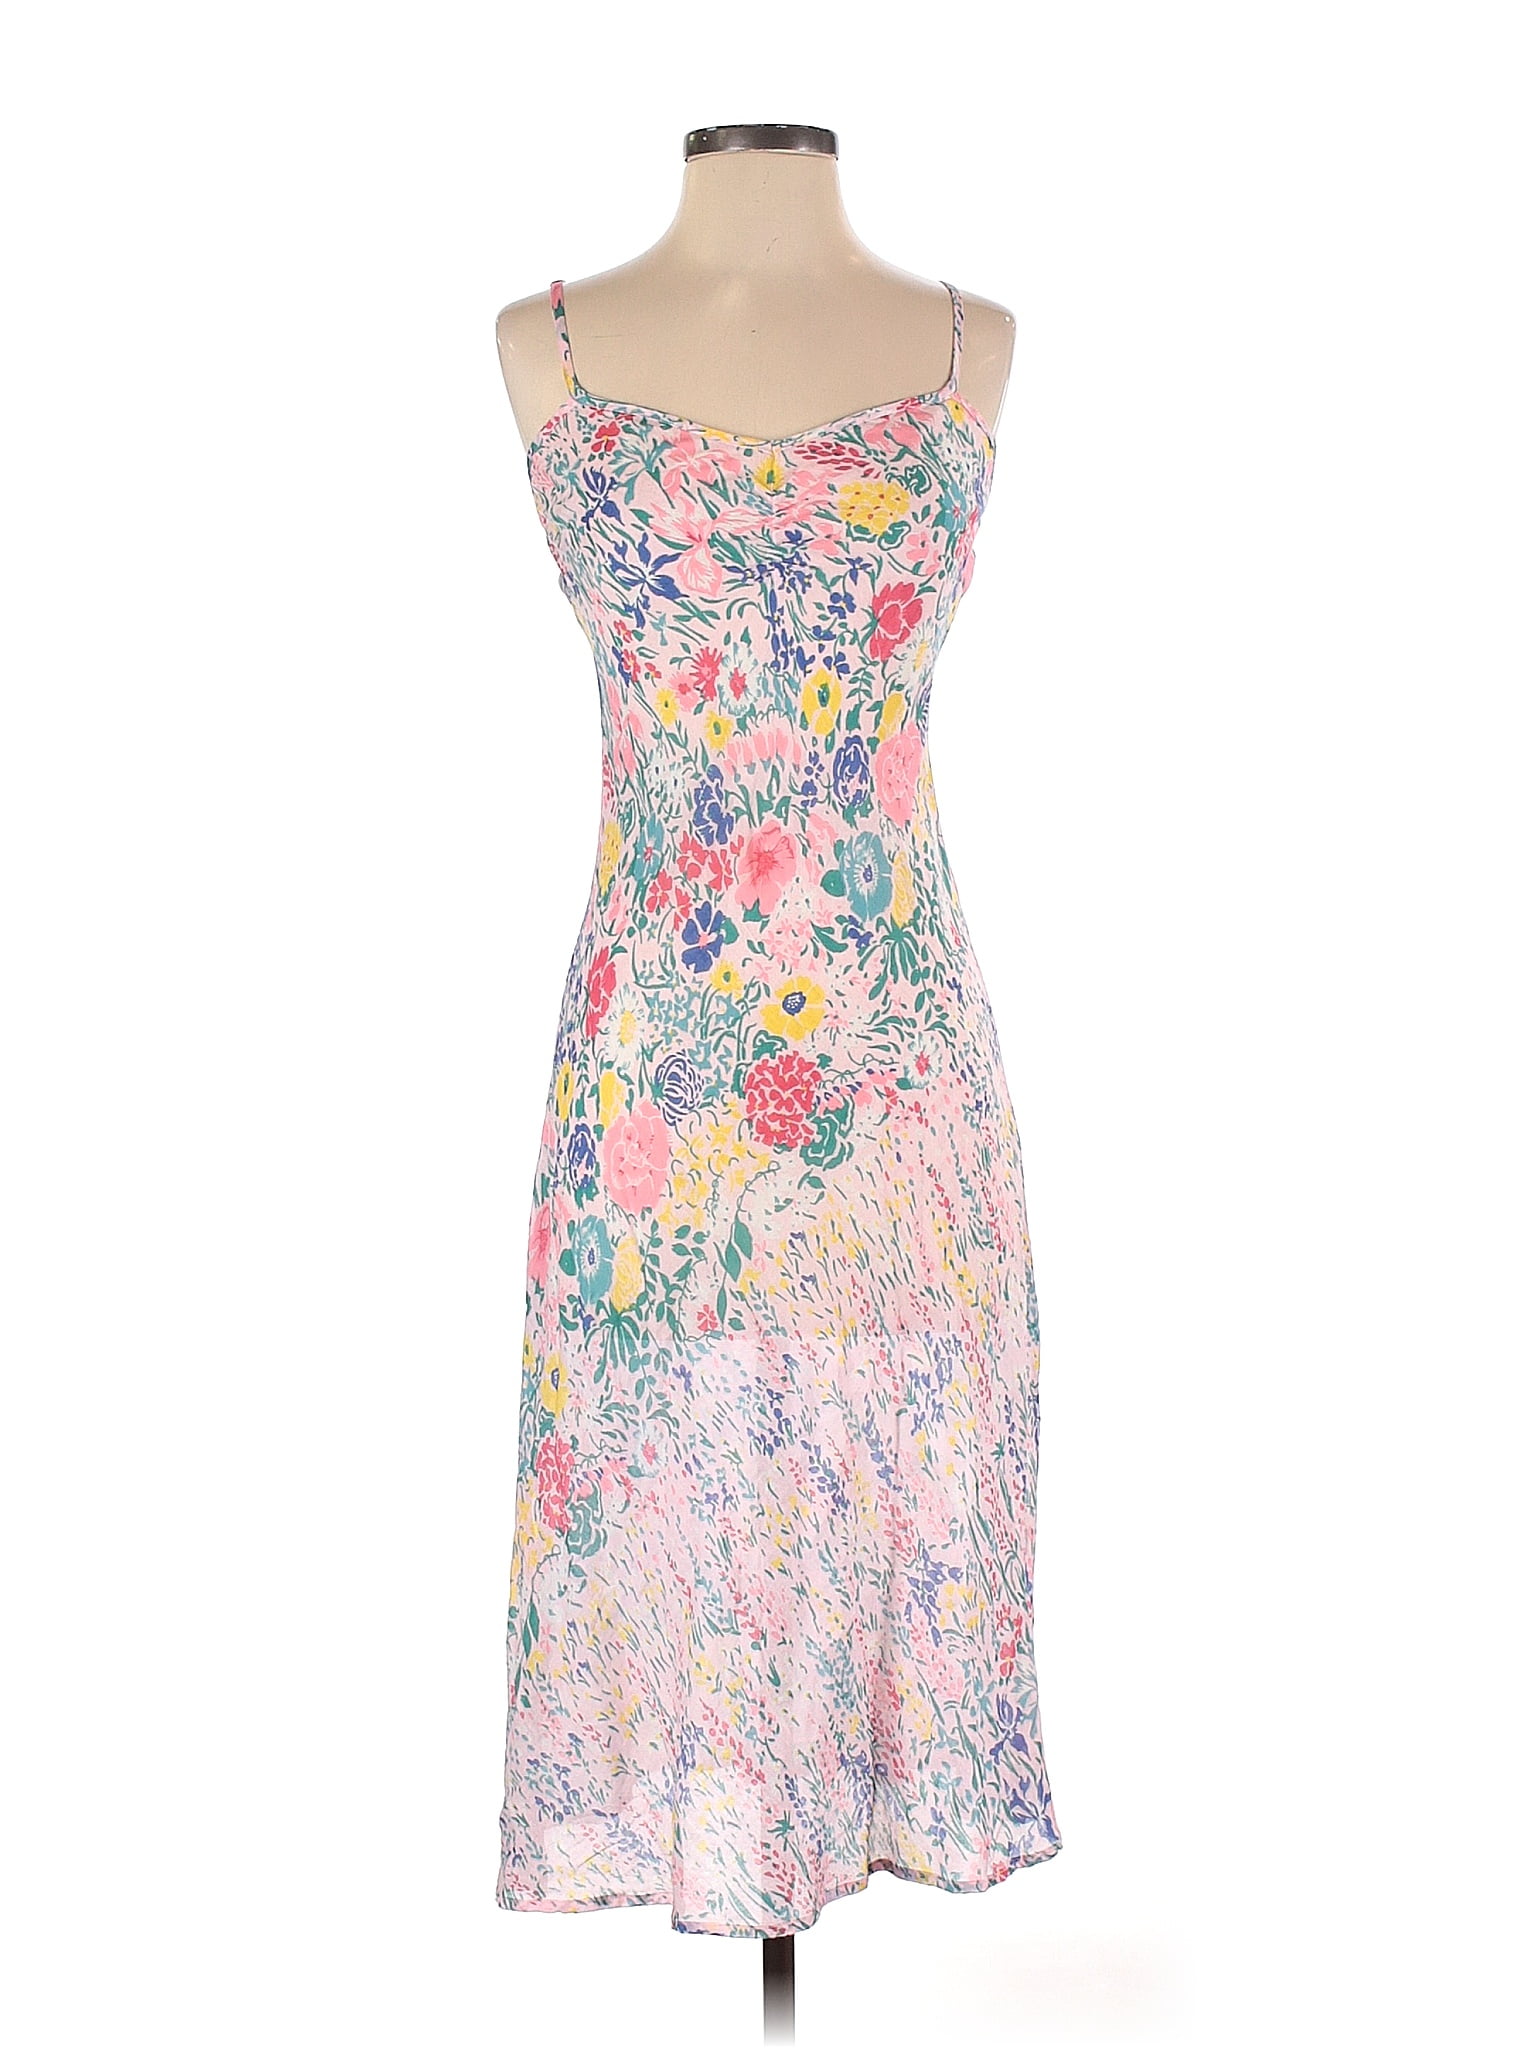 Banjanan 100% Cotton Floral Multi Color Pink Casual Dress Size S - 68% ...